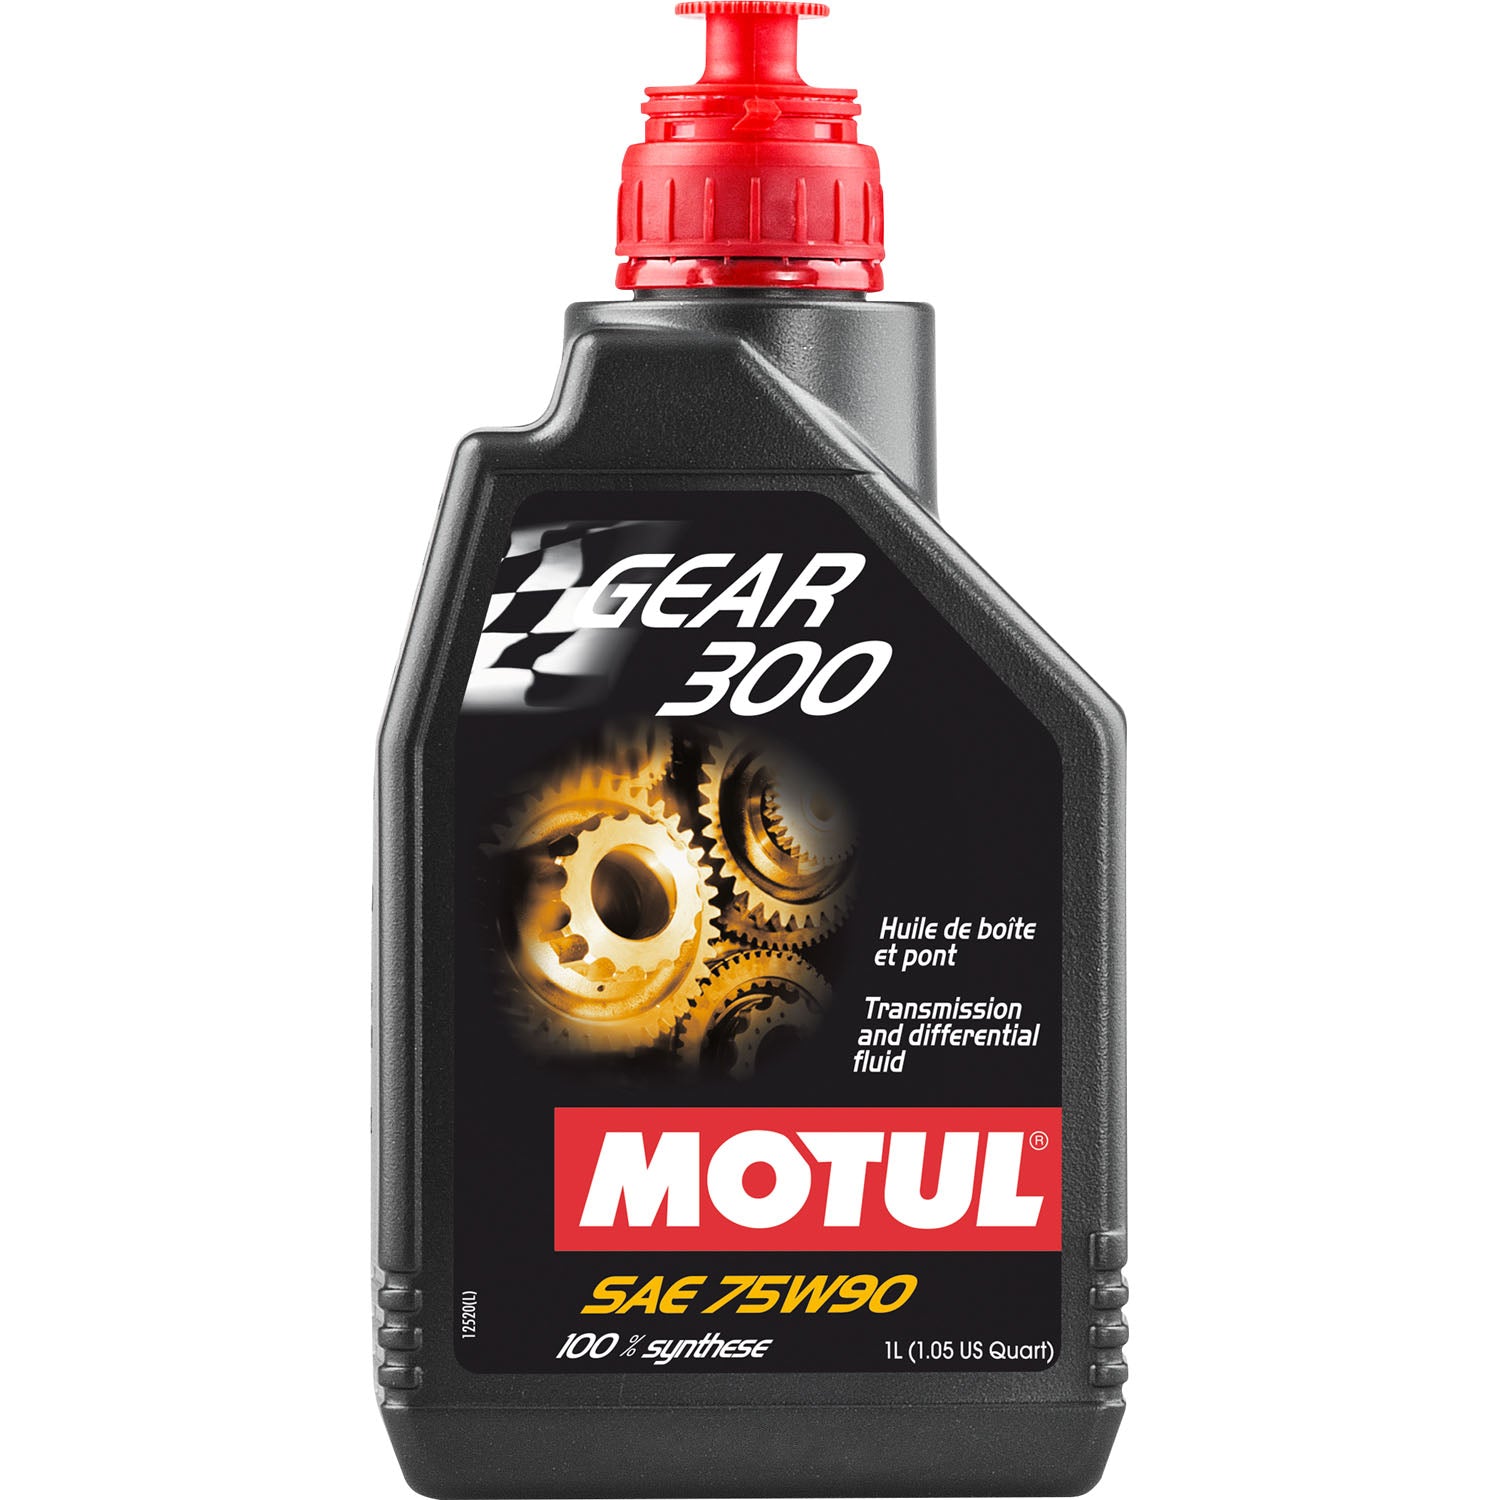 Motul Gear 300 Transmission and Differential Fluid 75W90 - 1 Liter